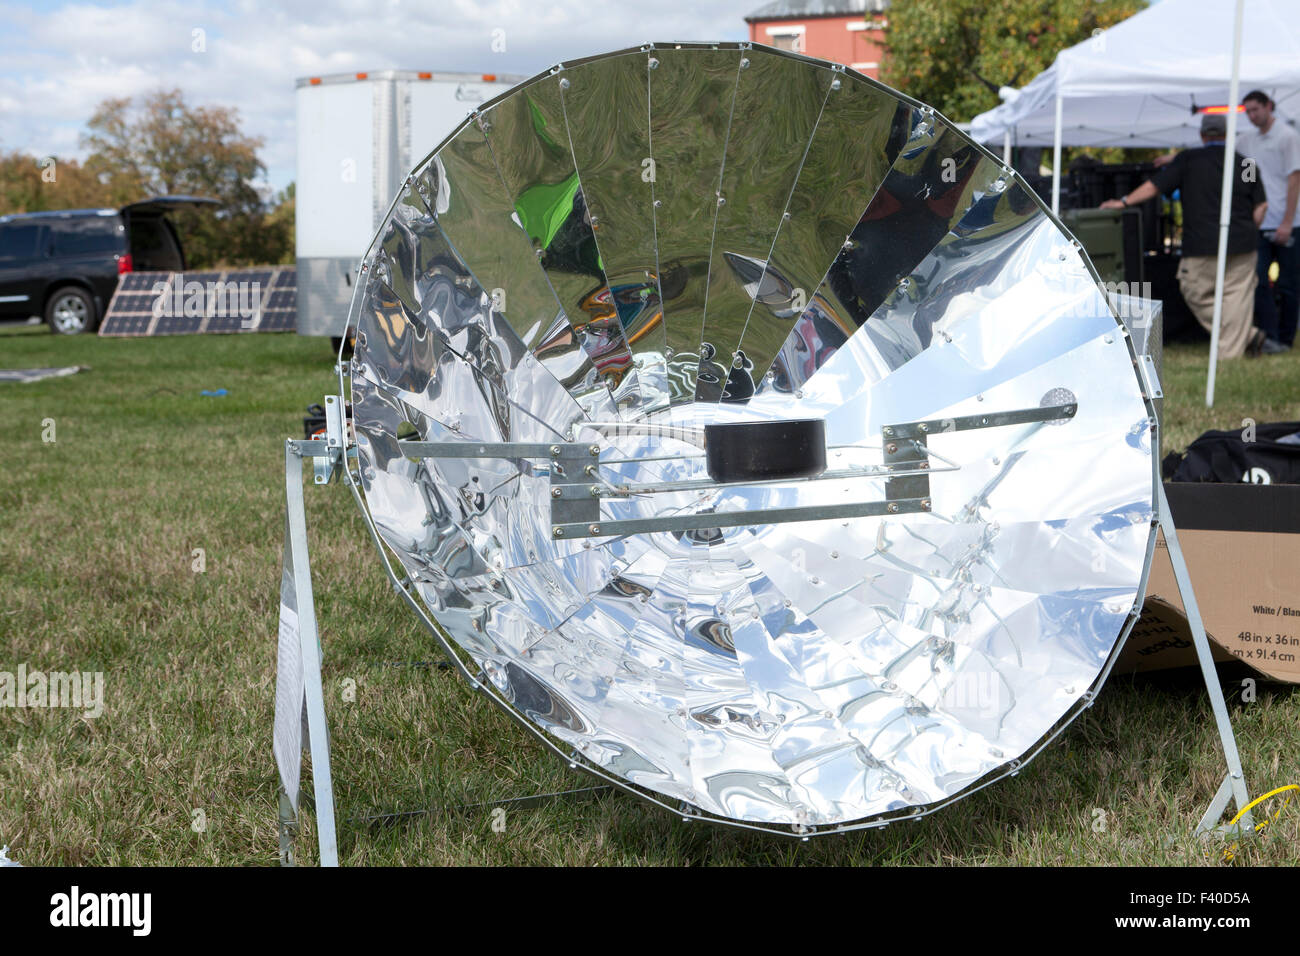 Parabolic solar cooker - Stock Image - T152/0565 - Science Photo